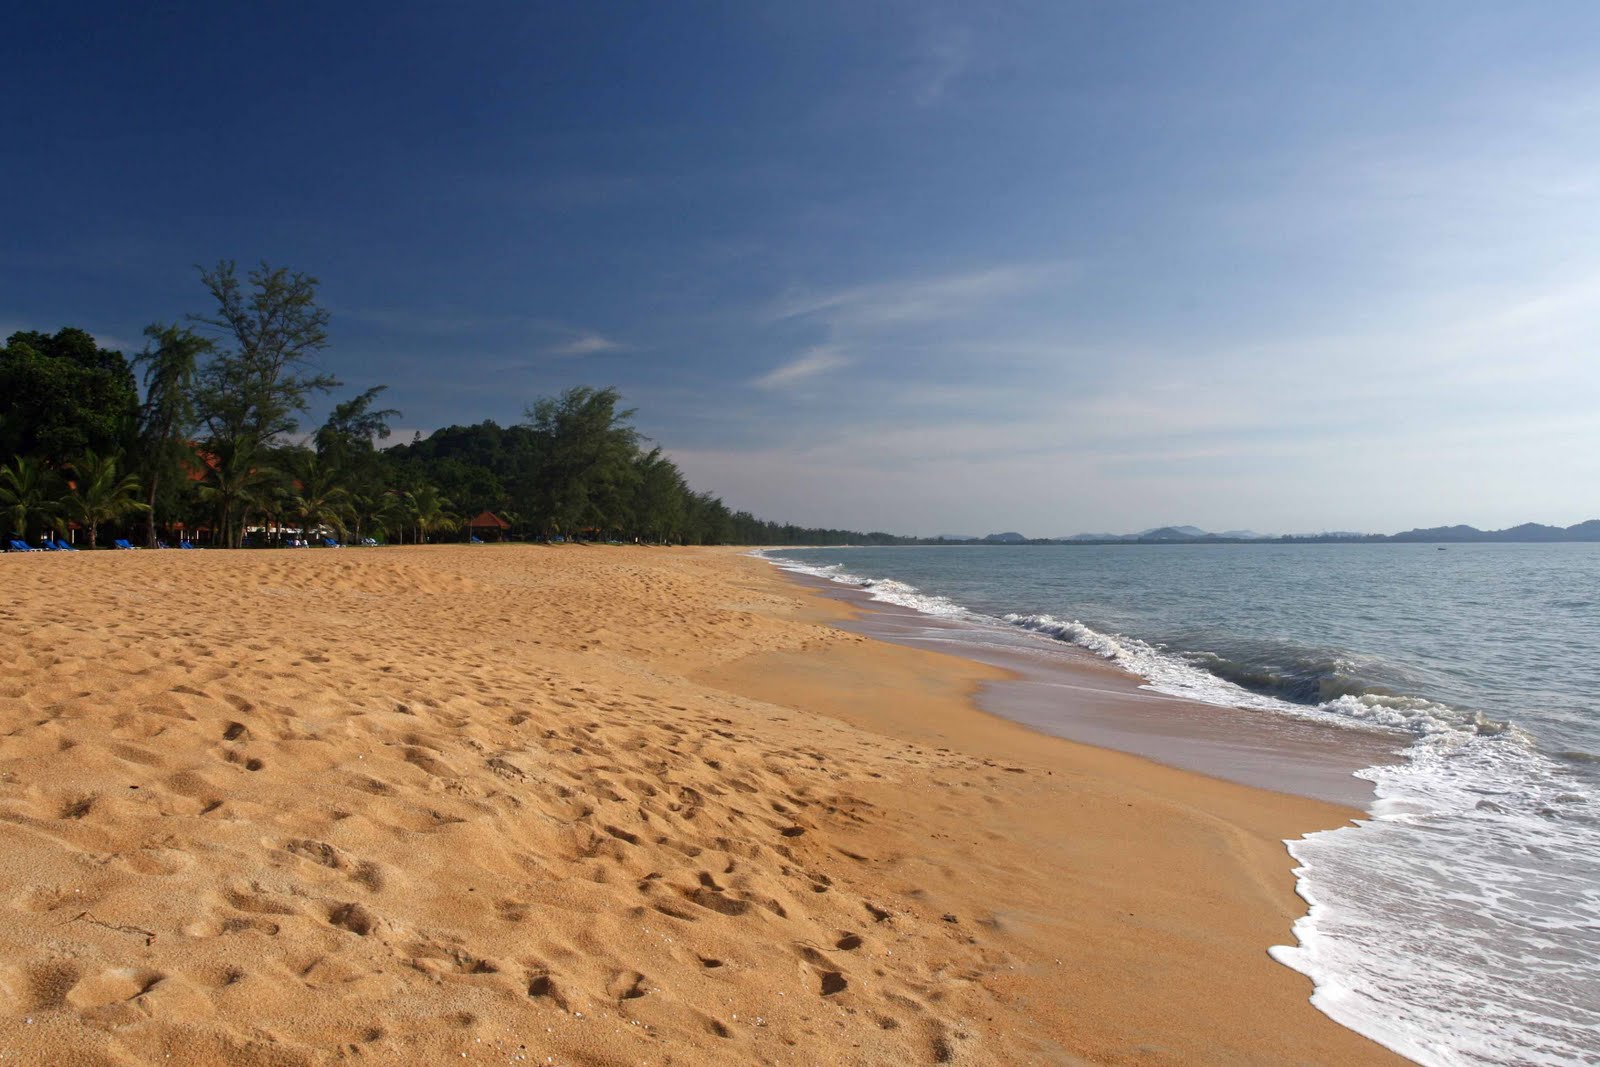  Malaysia  Beach  Cherating  Beach 